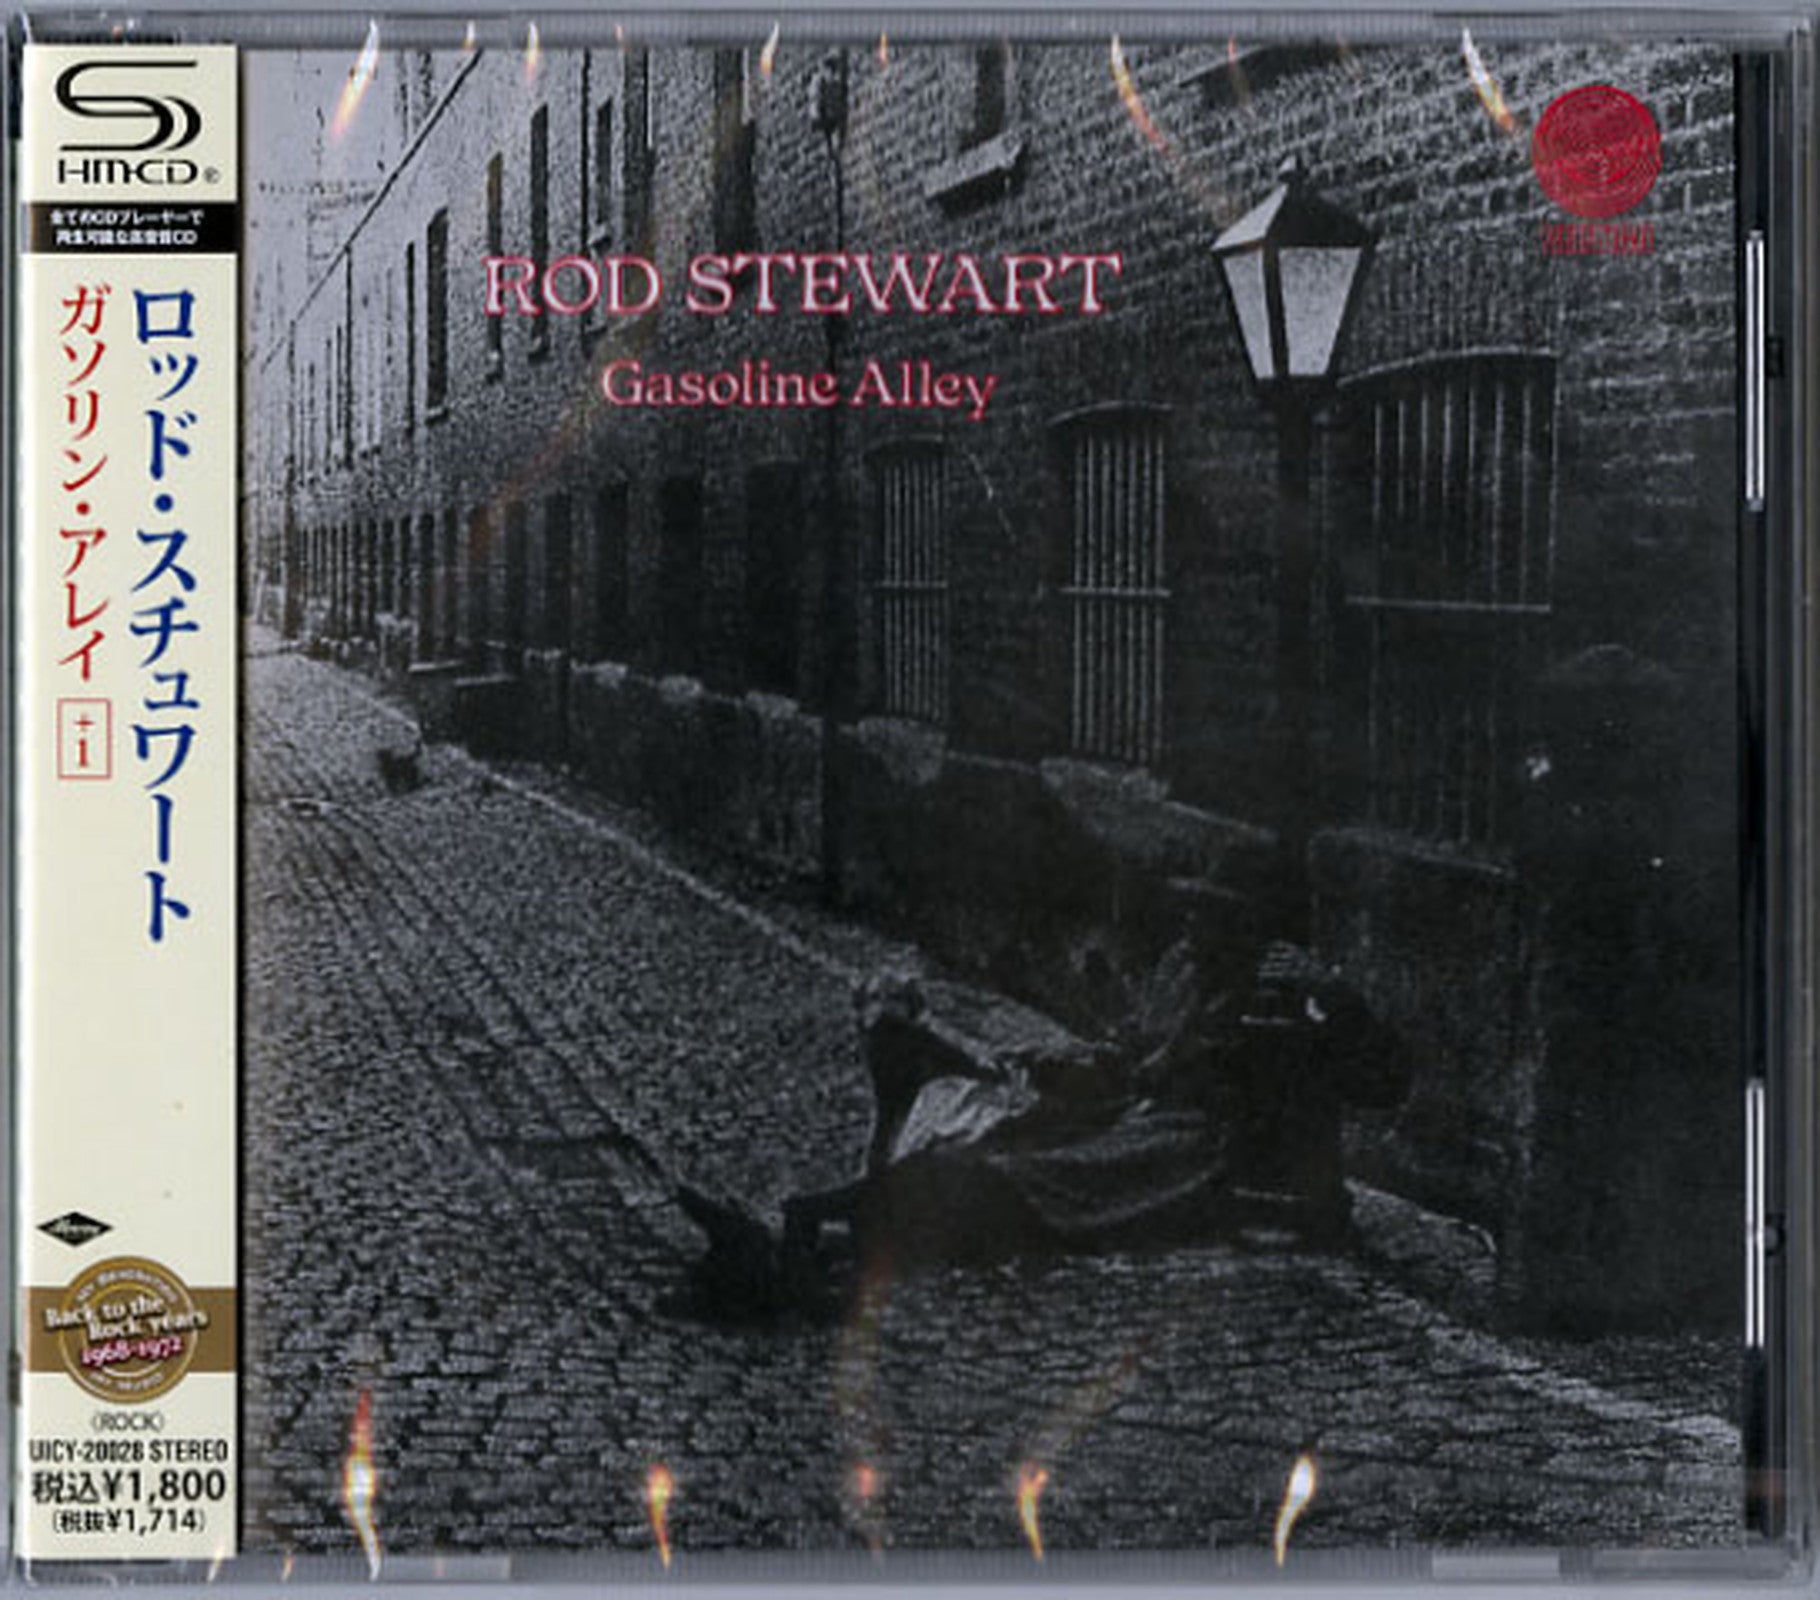 Rod Stewart Gasoline Alley +1 Japan SHM-CD Bonus Track CDs Vinyl  Japan Store